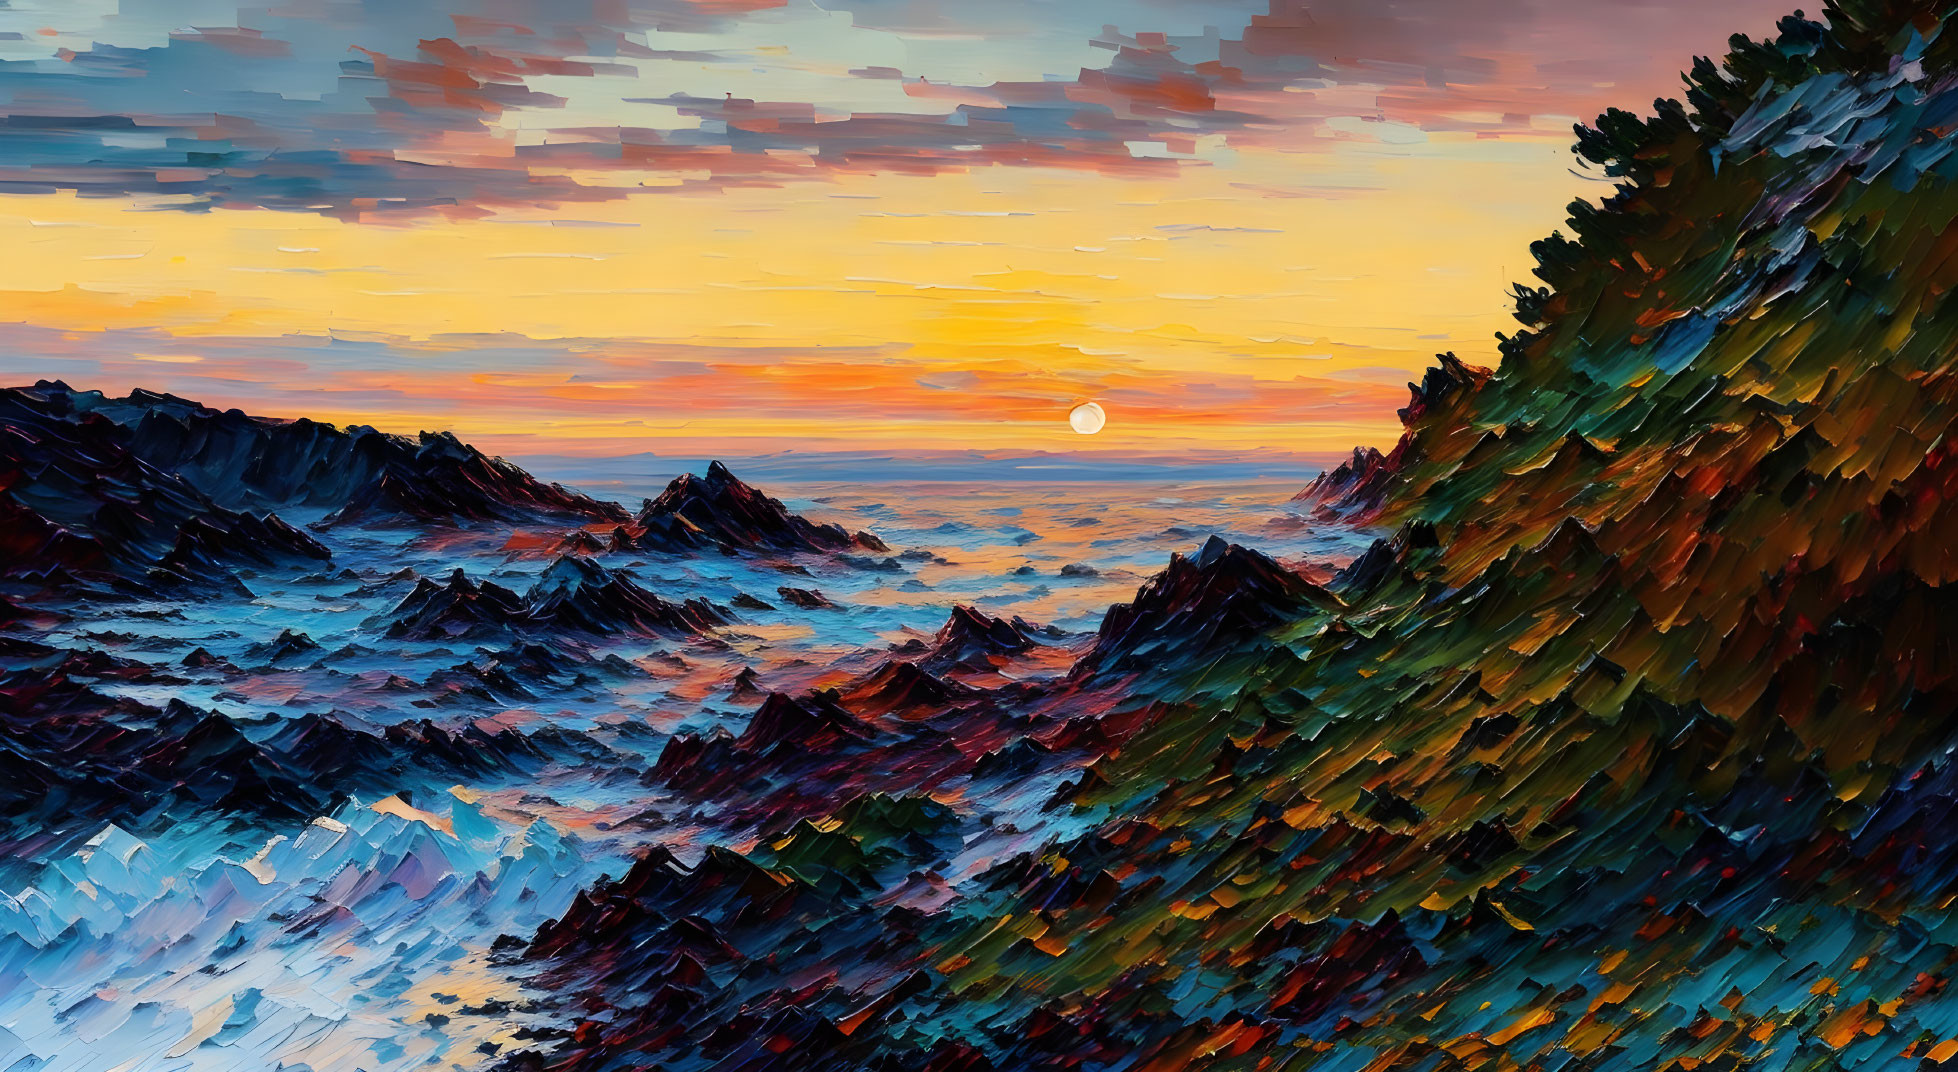 Vibrant sunset over rugged coastline with impressionist brushstrokes